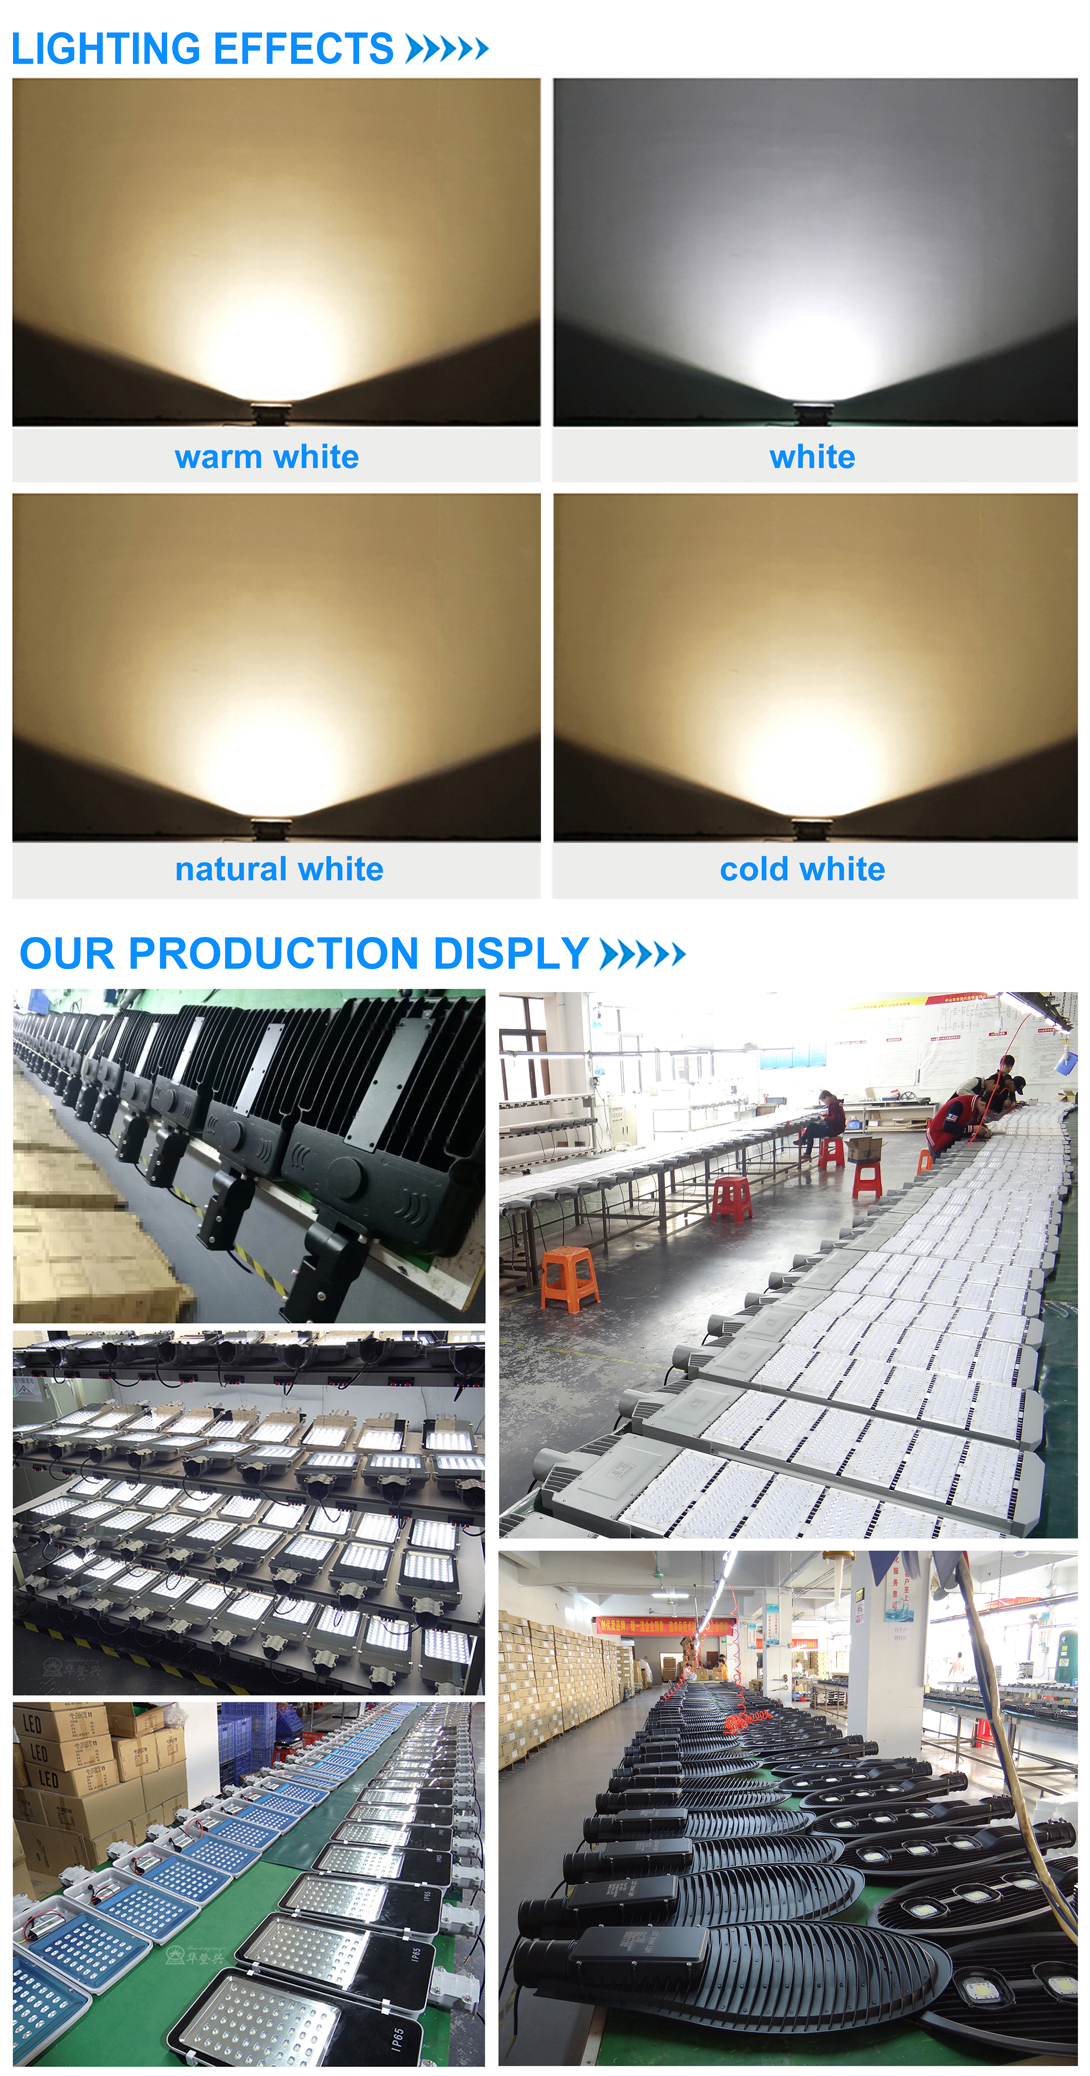 Factory direct sale outdoor lighting aluminum material shell 2 3 5 years warranty IP65 Waterproof 30w 50w 100w 150w led street lights